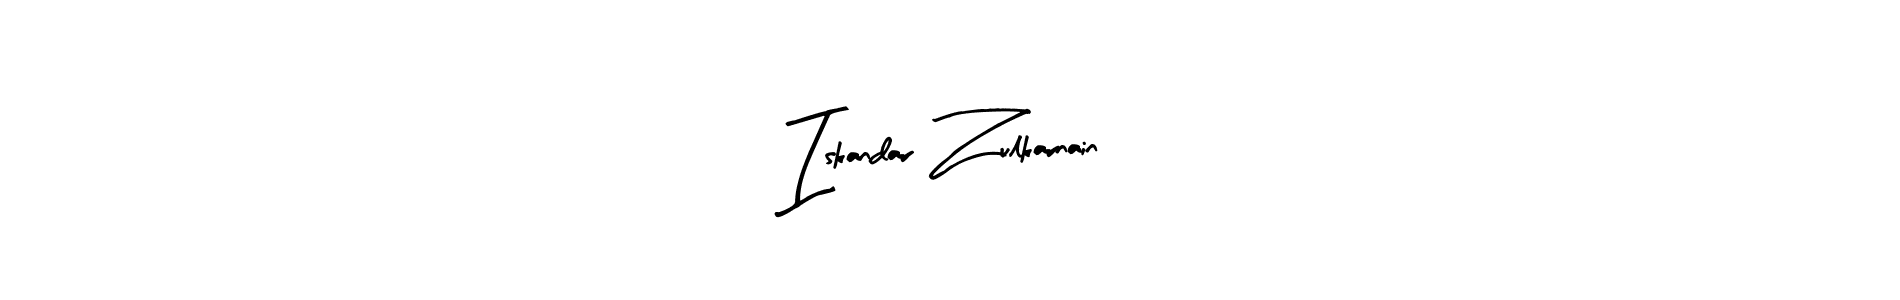 How to Draw Iskandar Zulkarnain signature style? Arty Signature is a latest design signature styles for name Iskandar Zulkarnain. Iskandar Zulkarnain signature style 8 images and pictures png